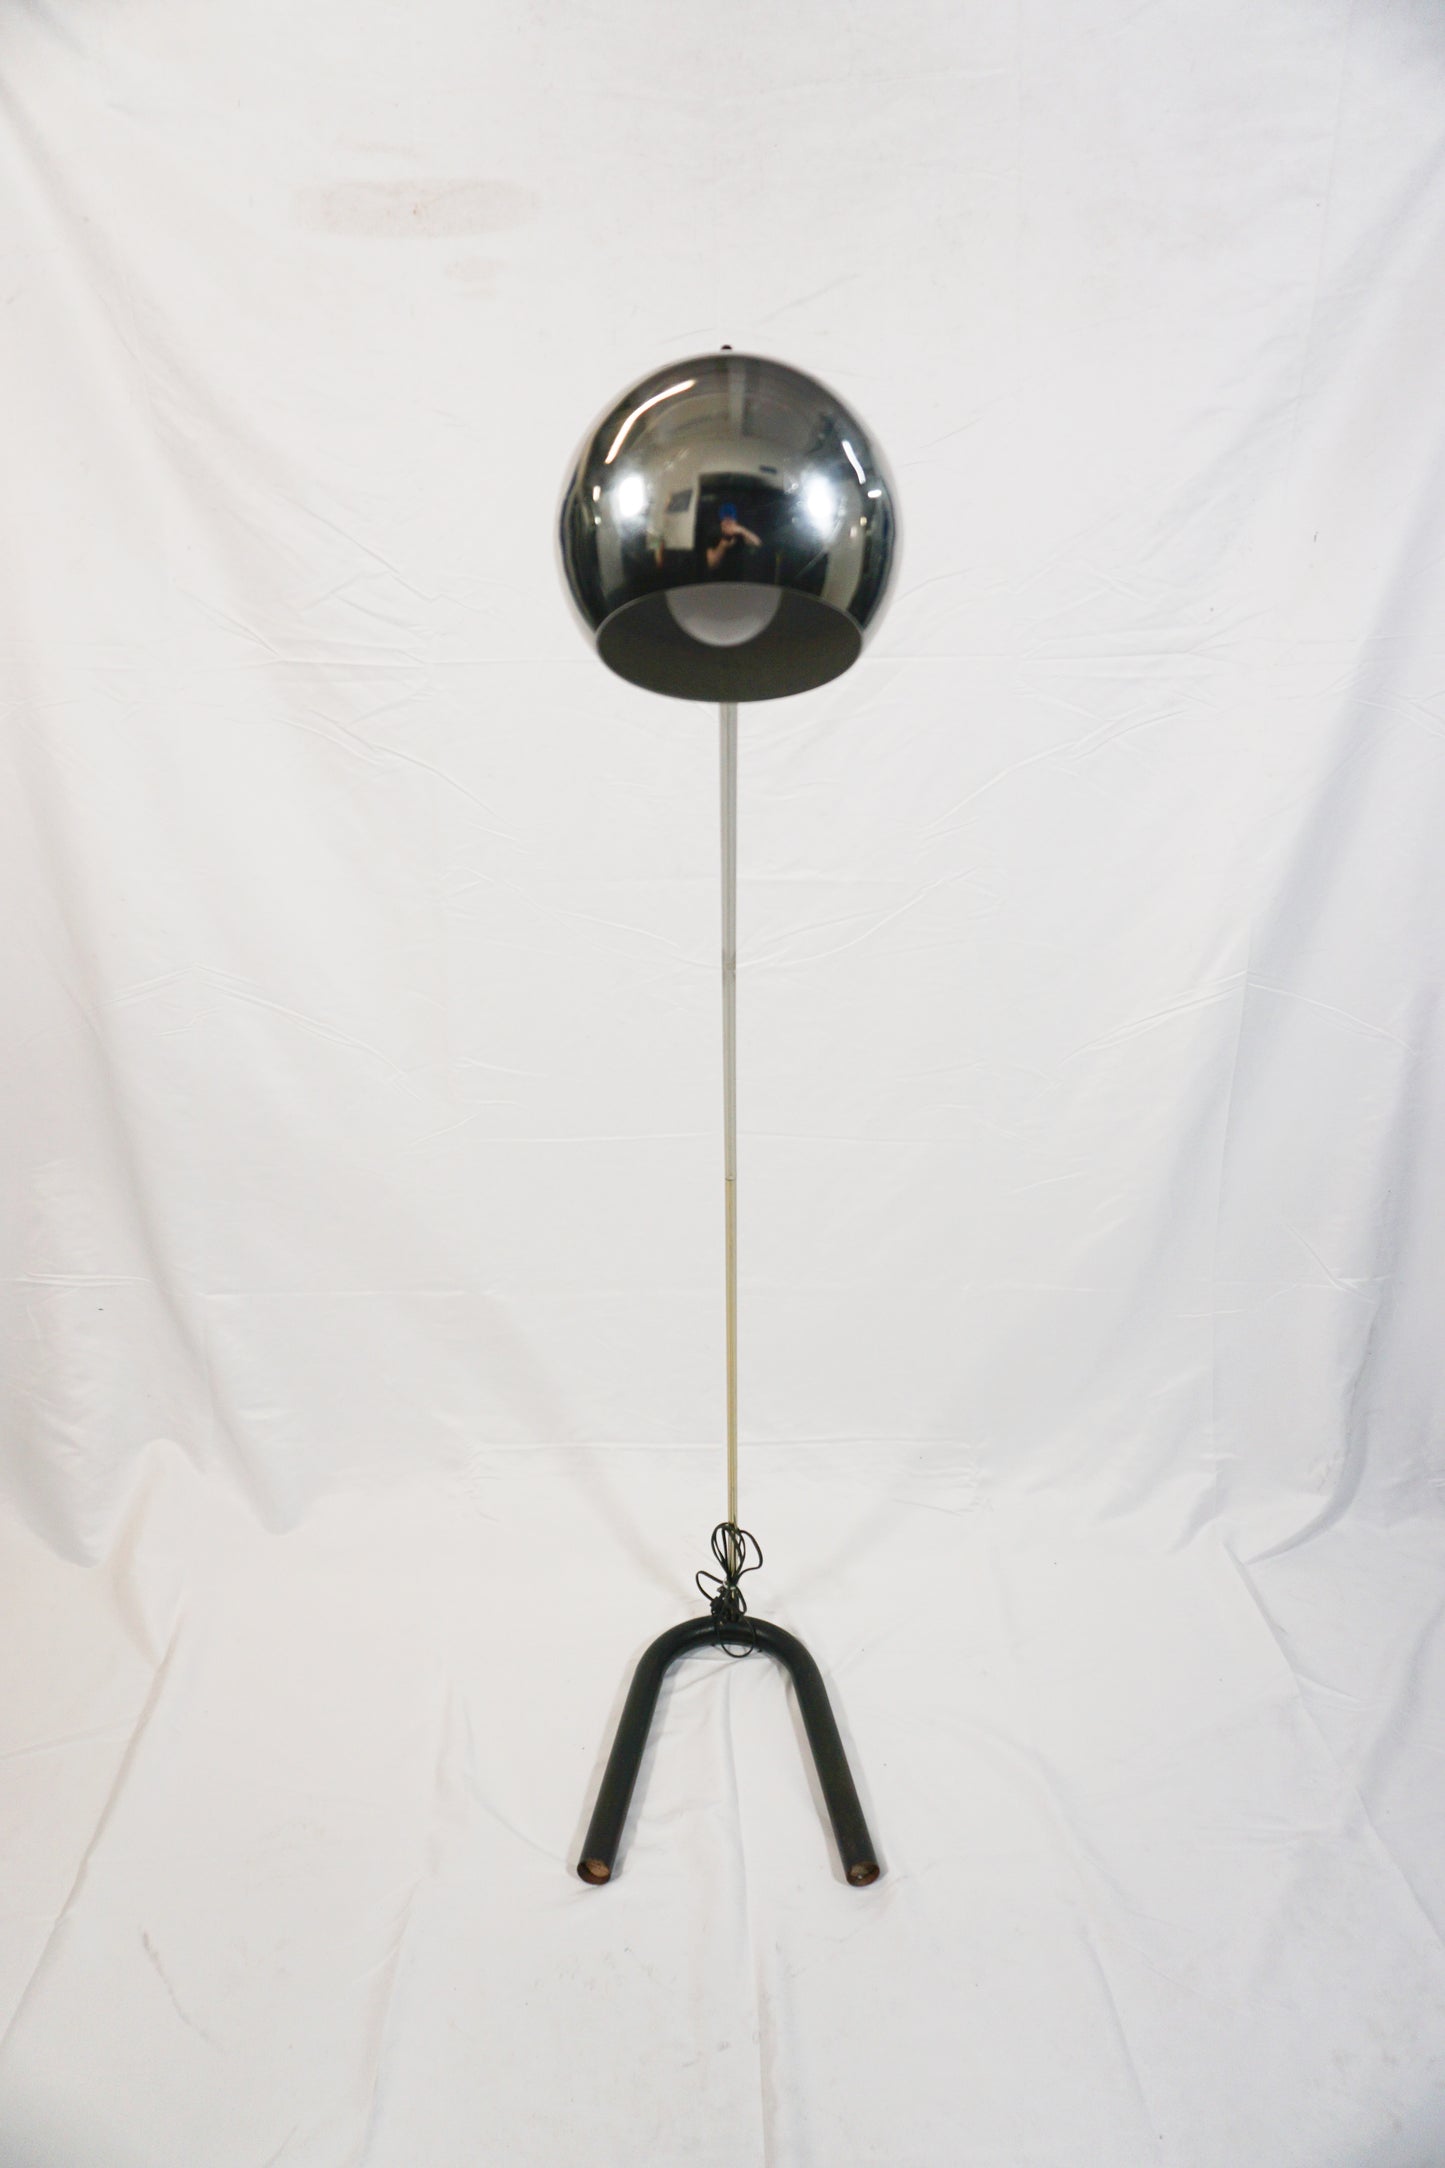 Vintage chrome arc articulating orbital shade prong-base floor lamp